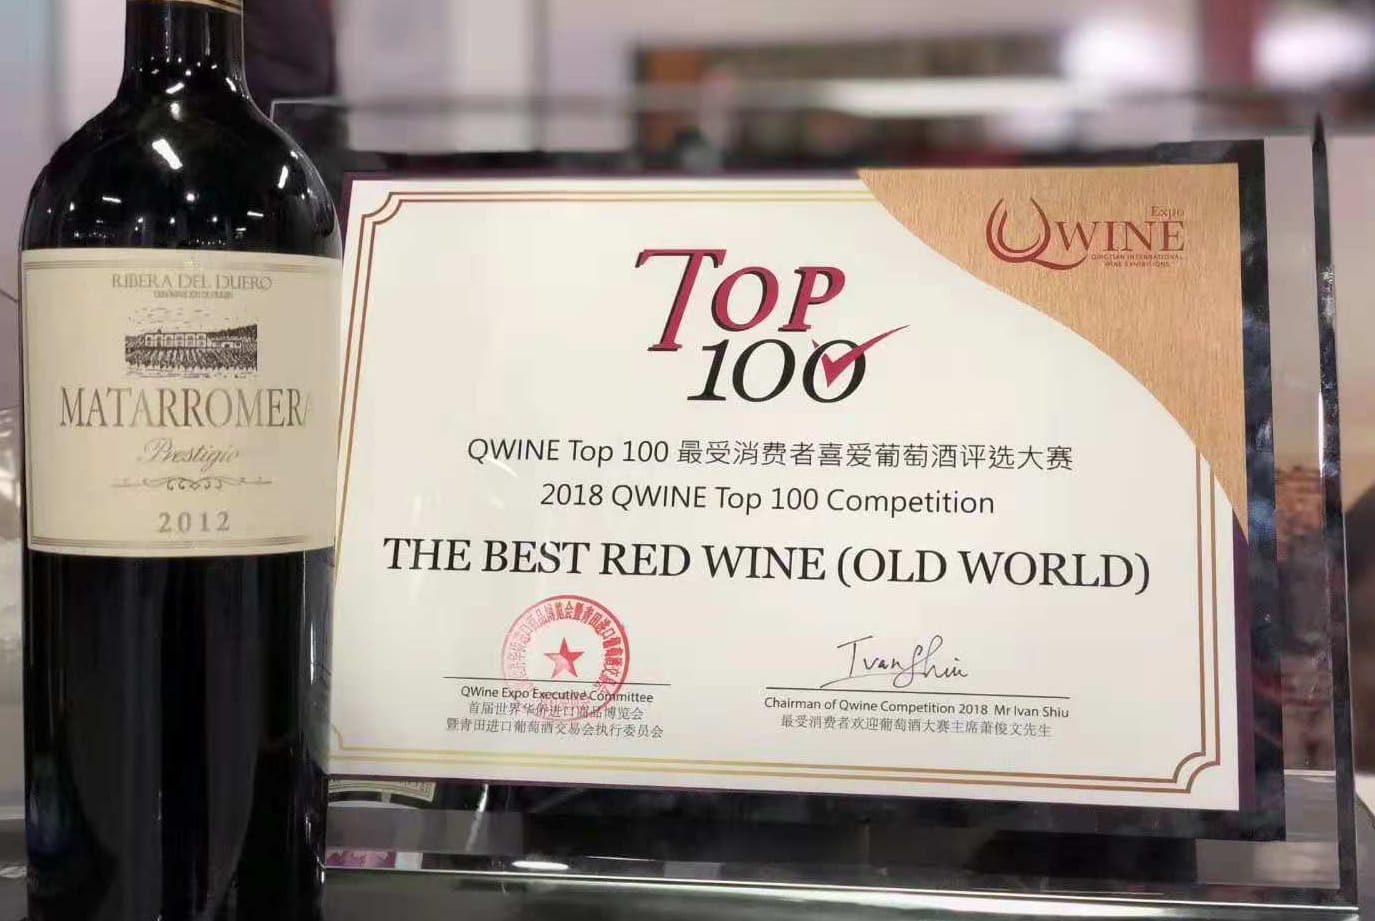 Matarromera Prestigio recognised as The Best Red Wine (Old World) in China